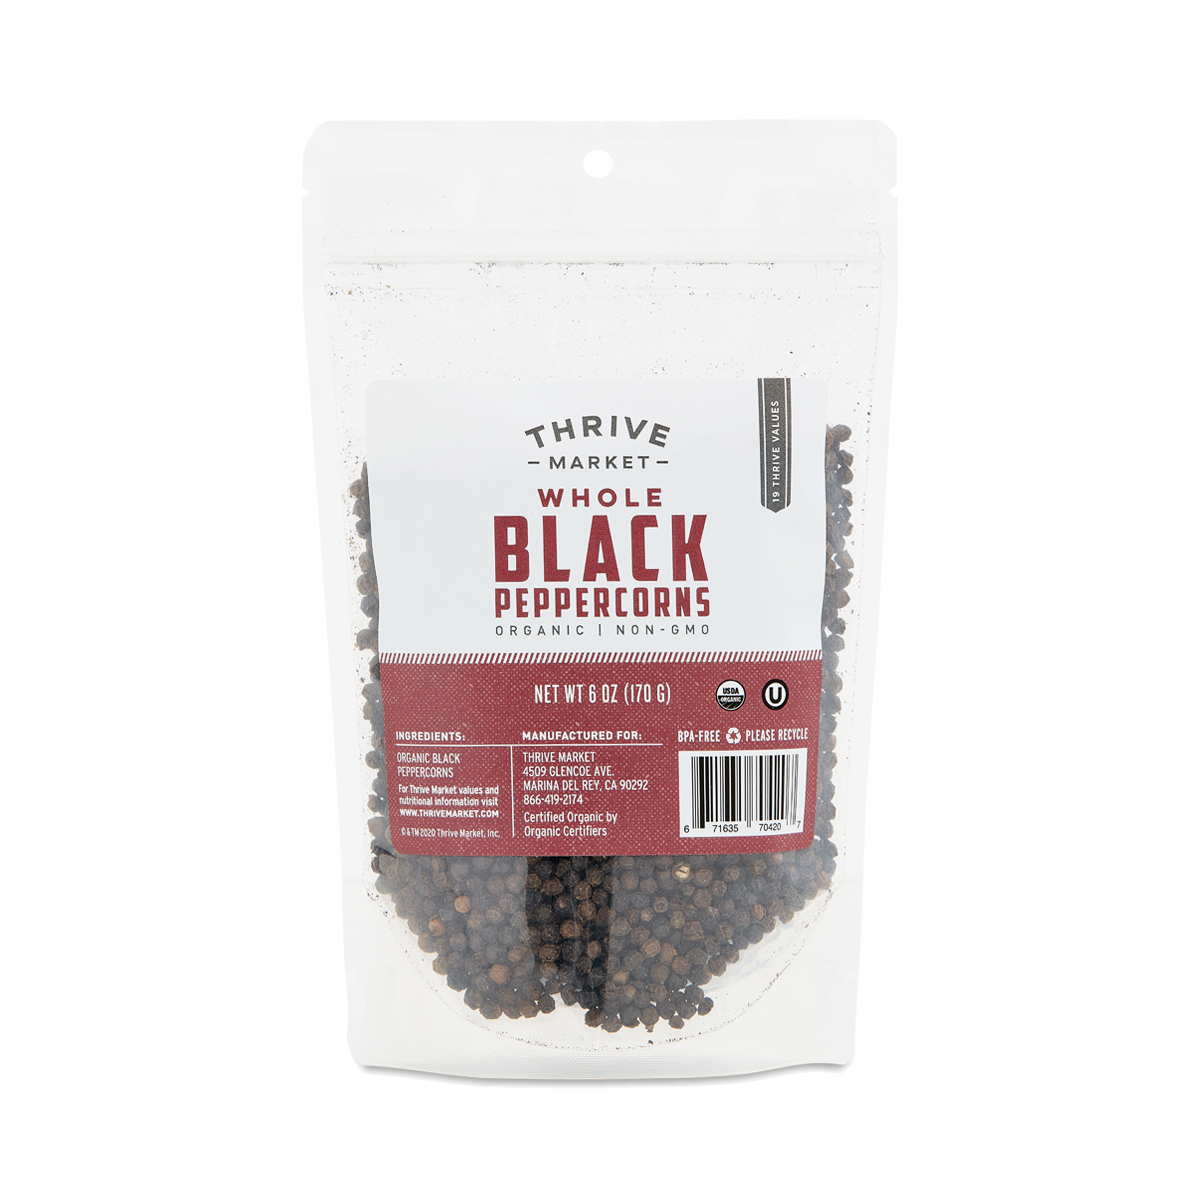 Thrive Market Organic Whole Black Peppercorns, Value Size 6 oz bag